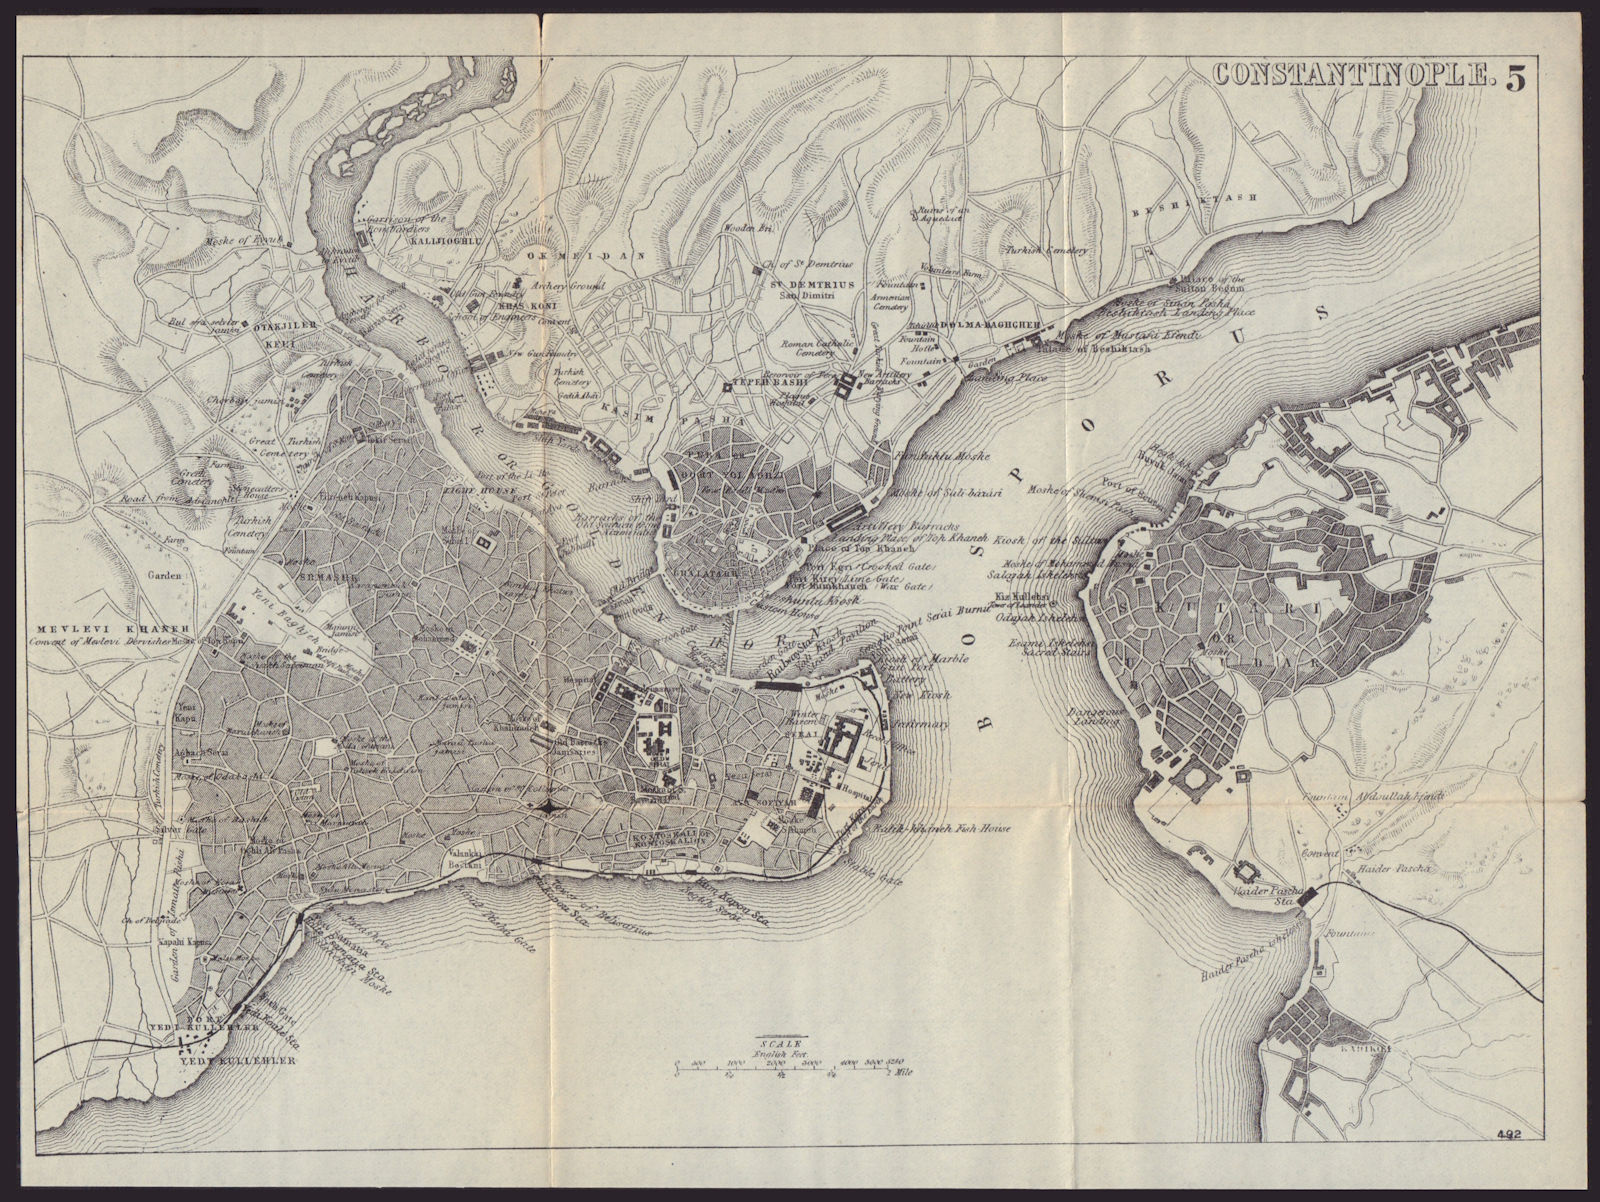 CONSTANTINOPLE / ISTANBUL antique town plan city map. Turkey. BRADSHAW 1892